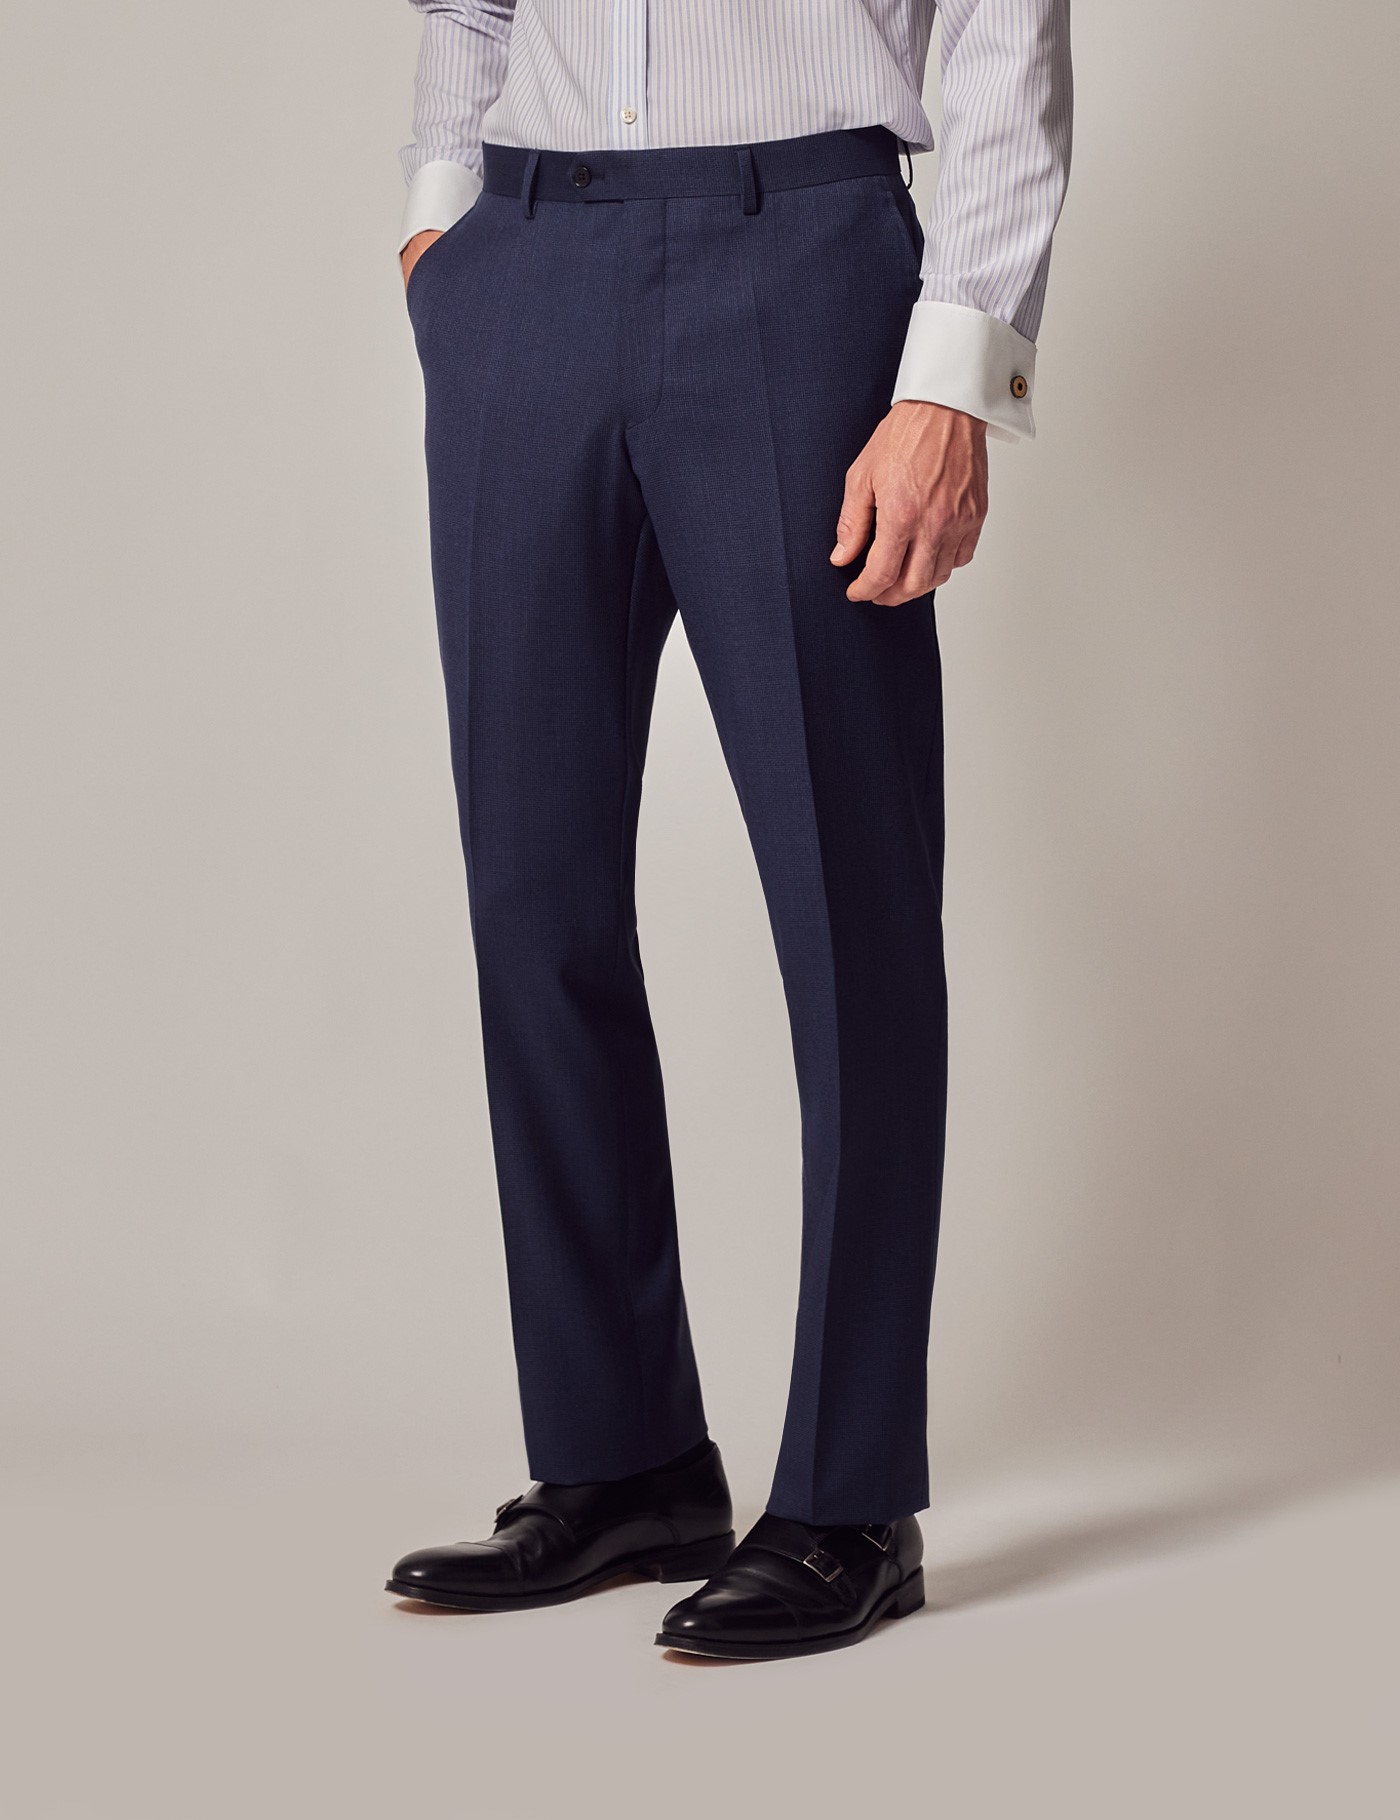 Brglopf Men's Stretch Dress Pants Slim Fit Skinny Suit Pants Business  Trousers Solid Color Suit Pants Work Office Trousers with Pockets -  Walmart.com